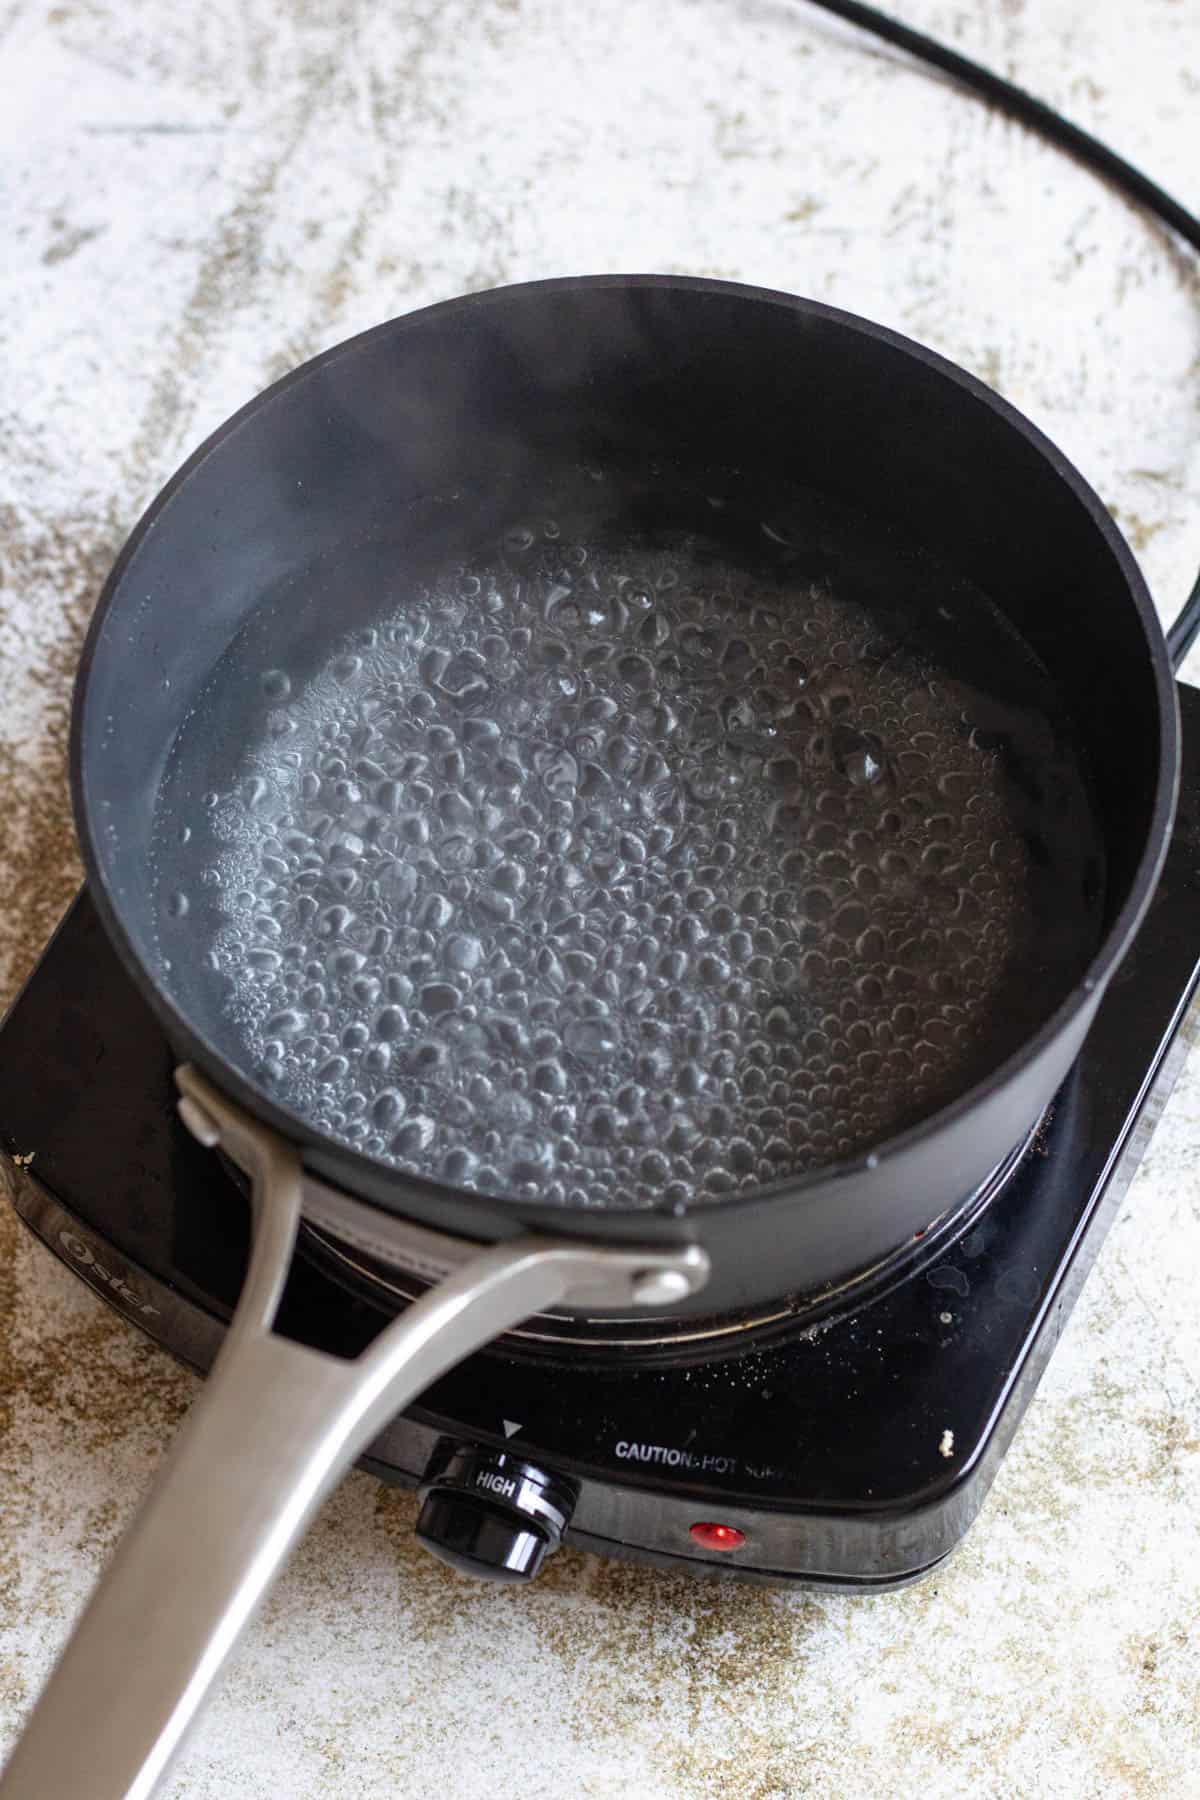 Boiling water in a saucepan. 